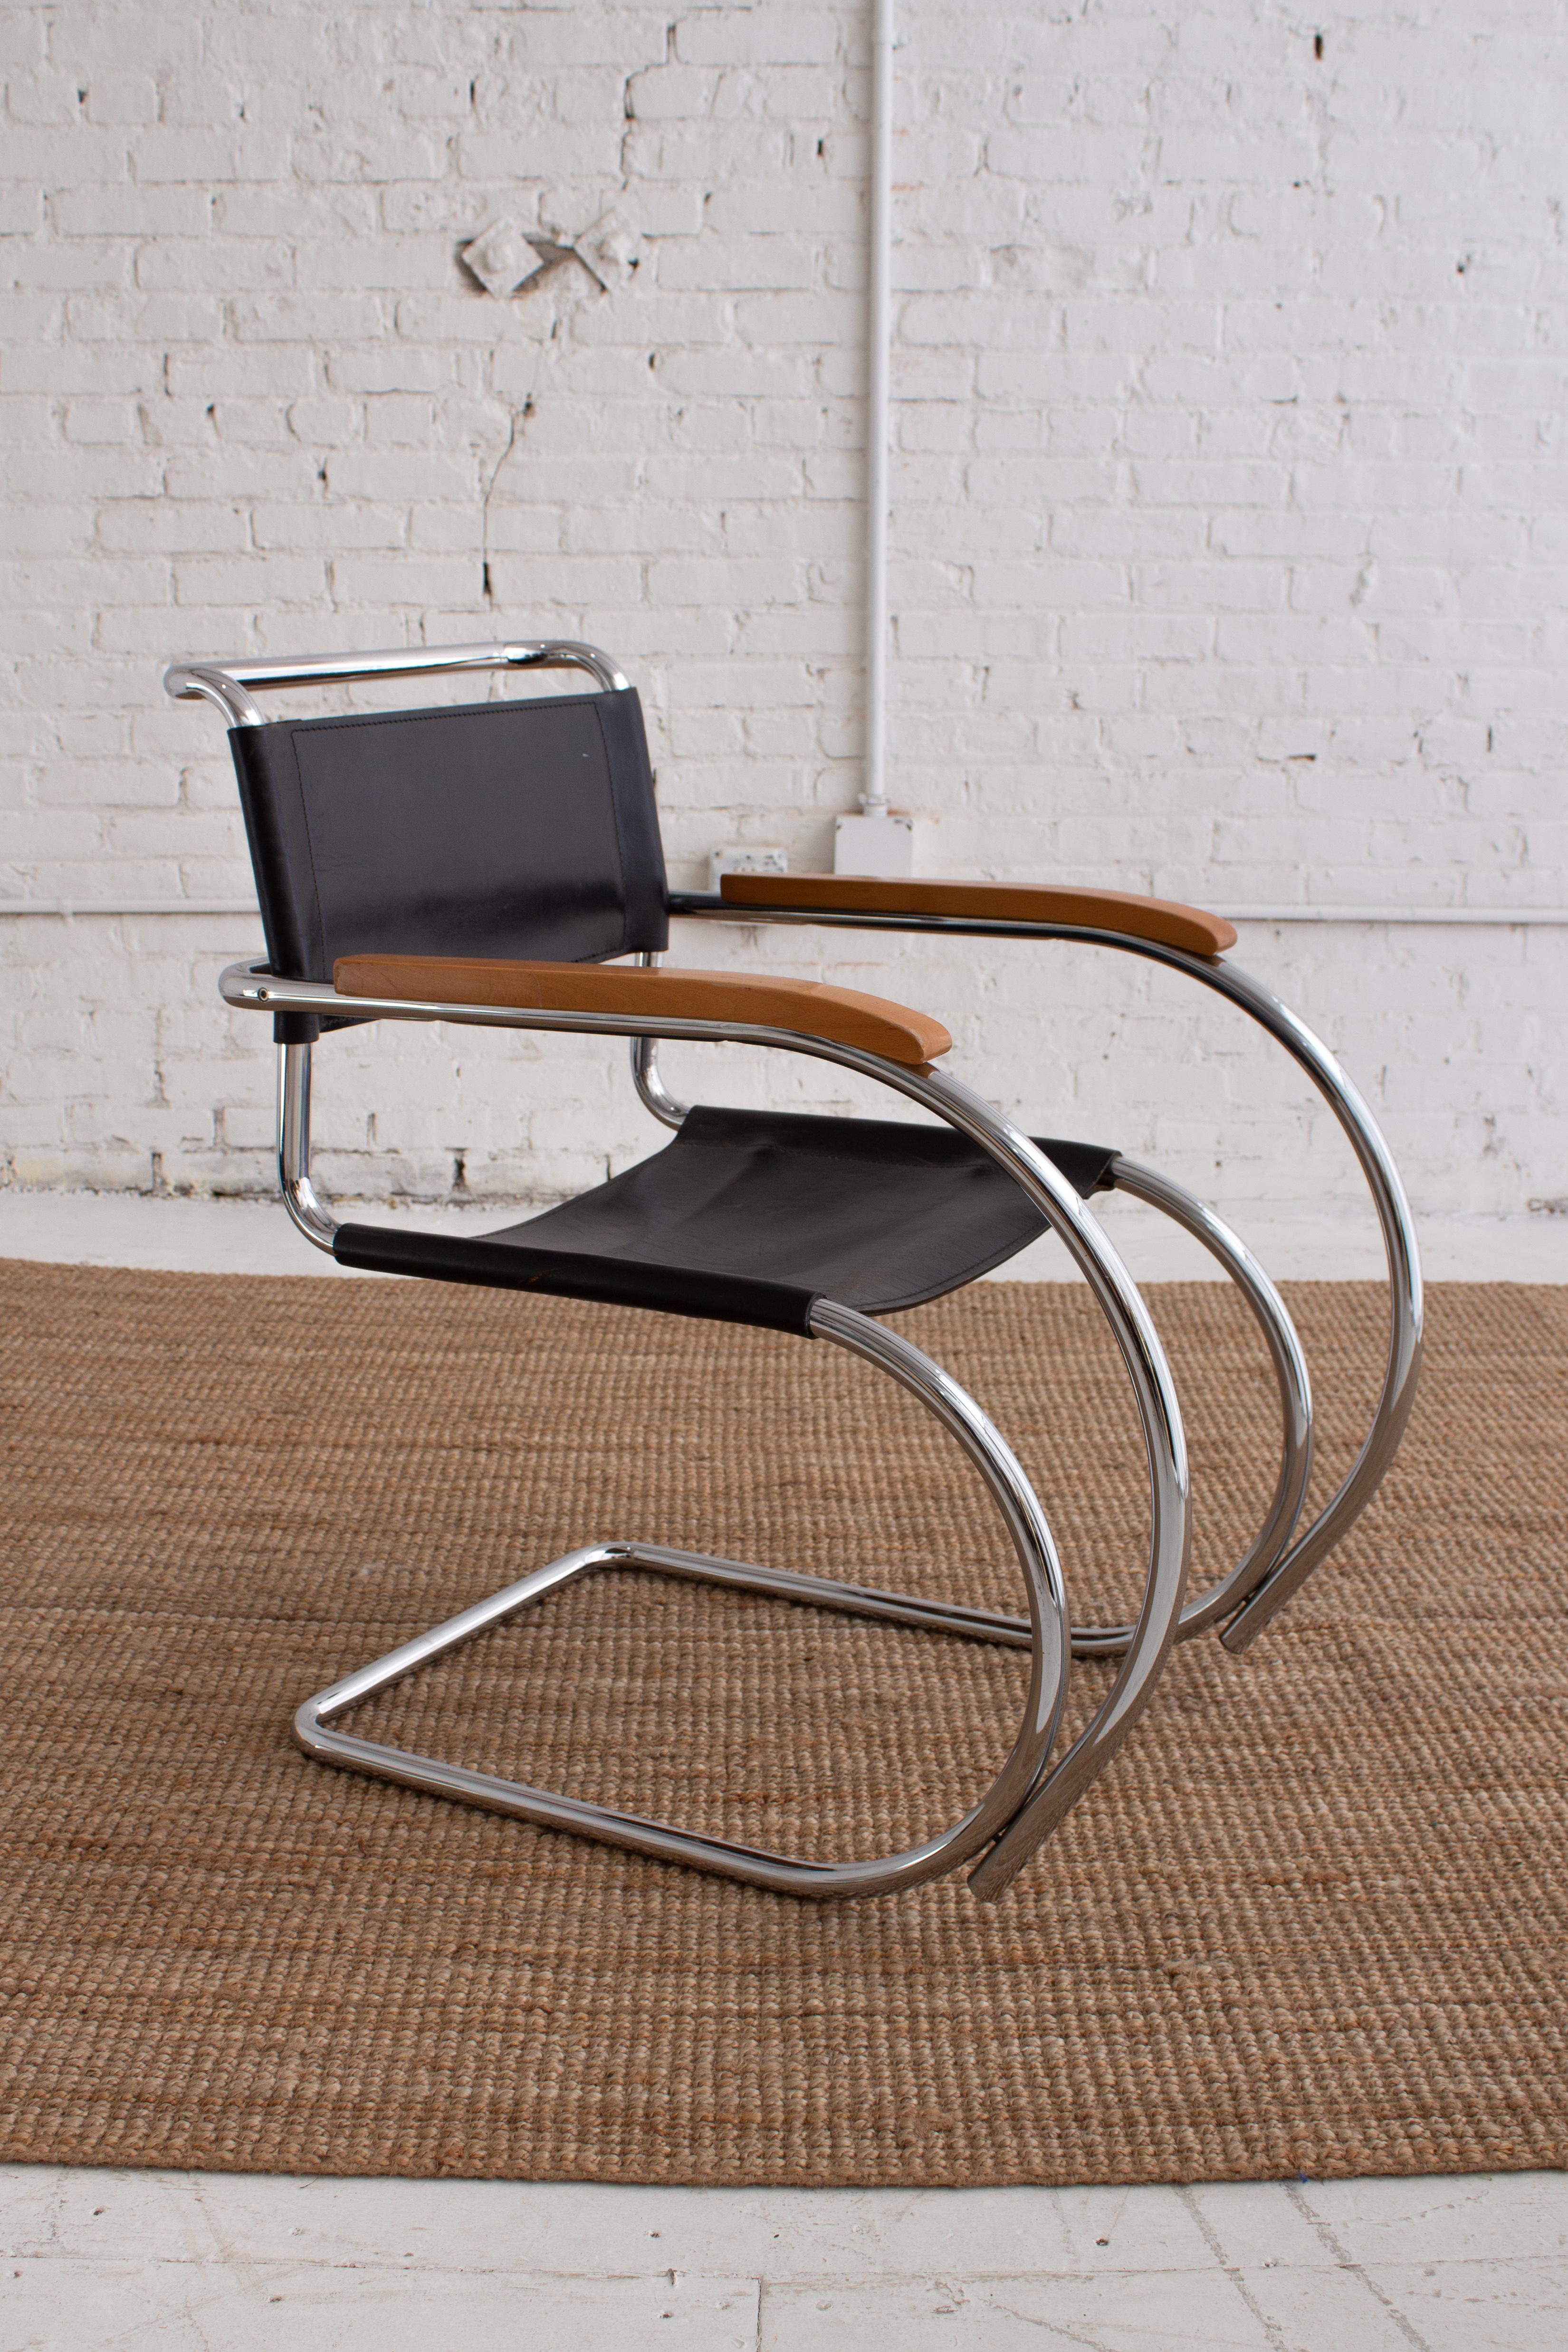 Bauhaus Mies Van Der Rohe Mr20 Leather & Chrome Lounge Chair